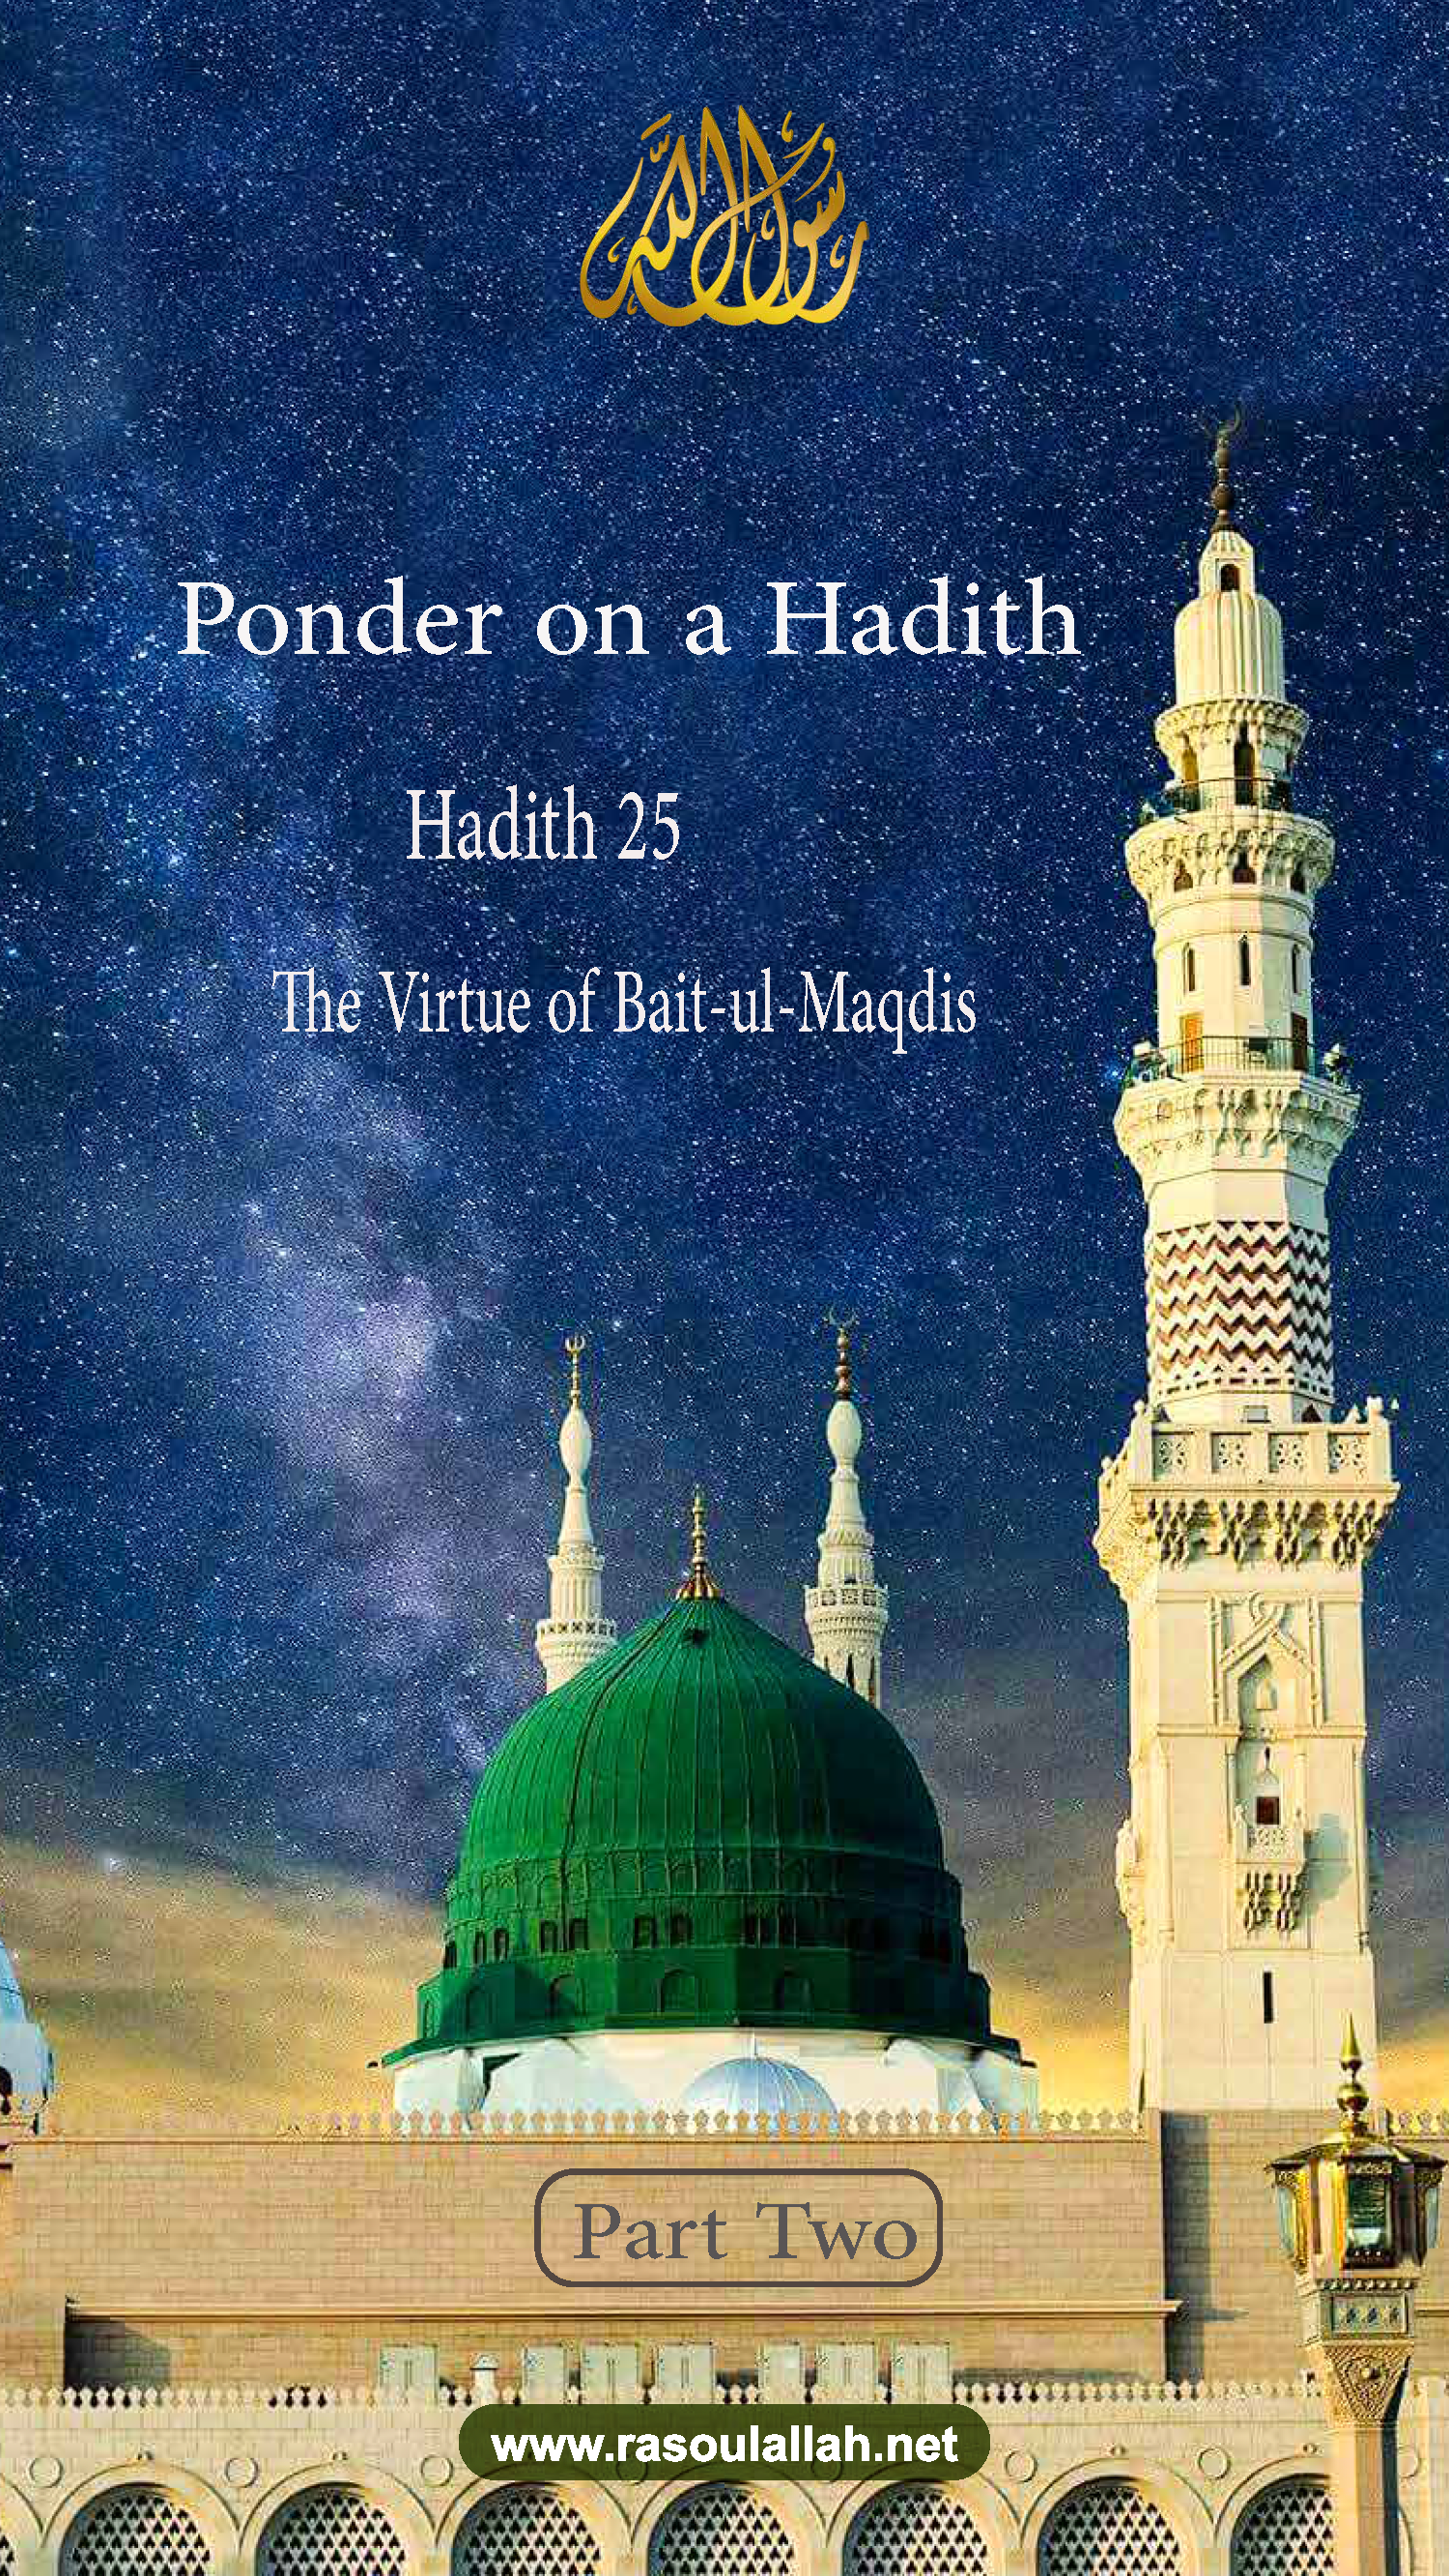 Hadith 25: The Virtue of Bait-ul-Maqdis